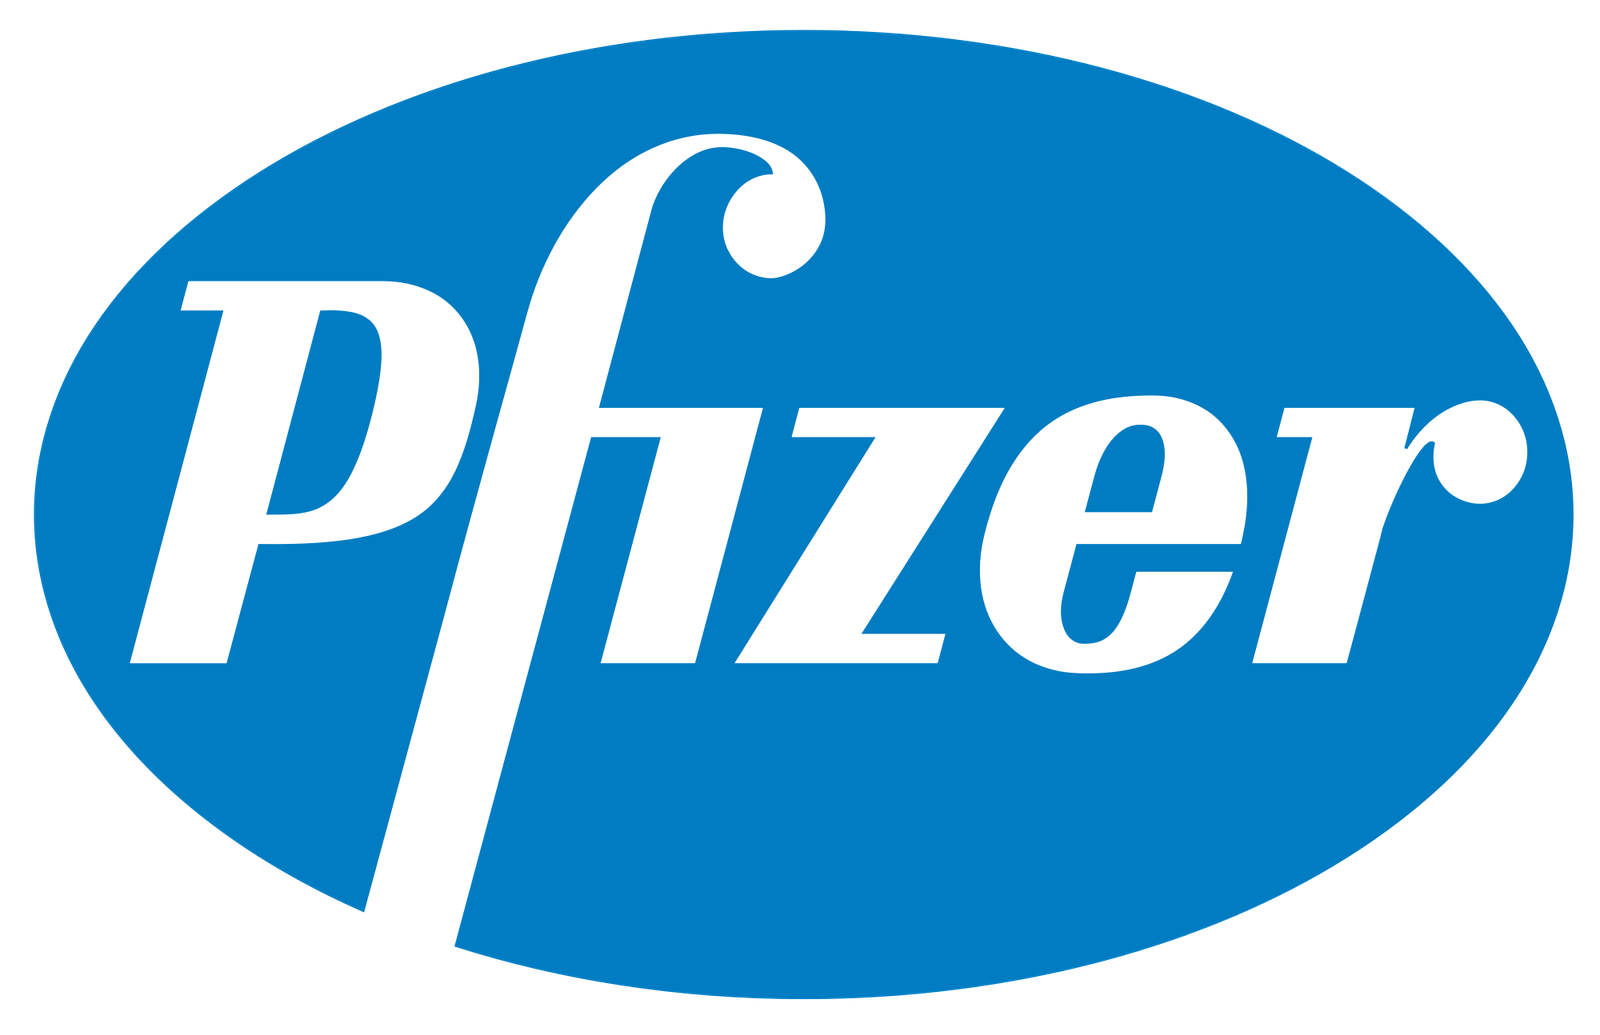 2000px-Pfizer_logo.svg_